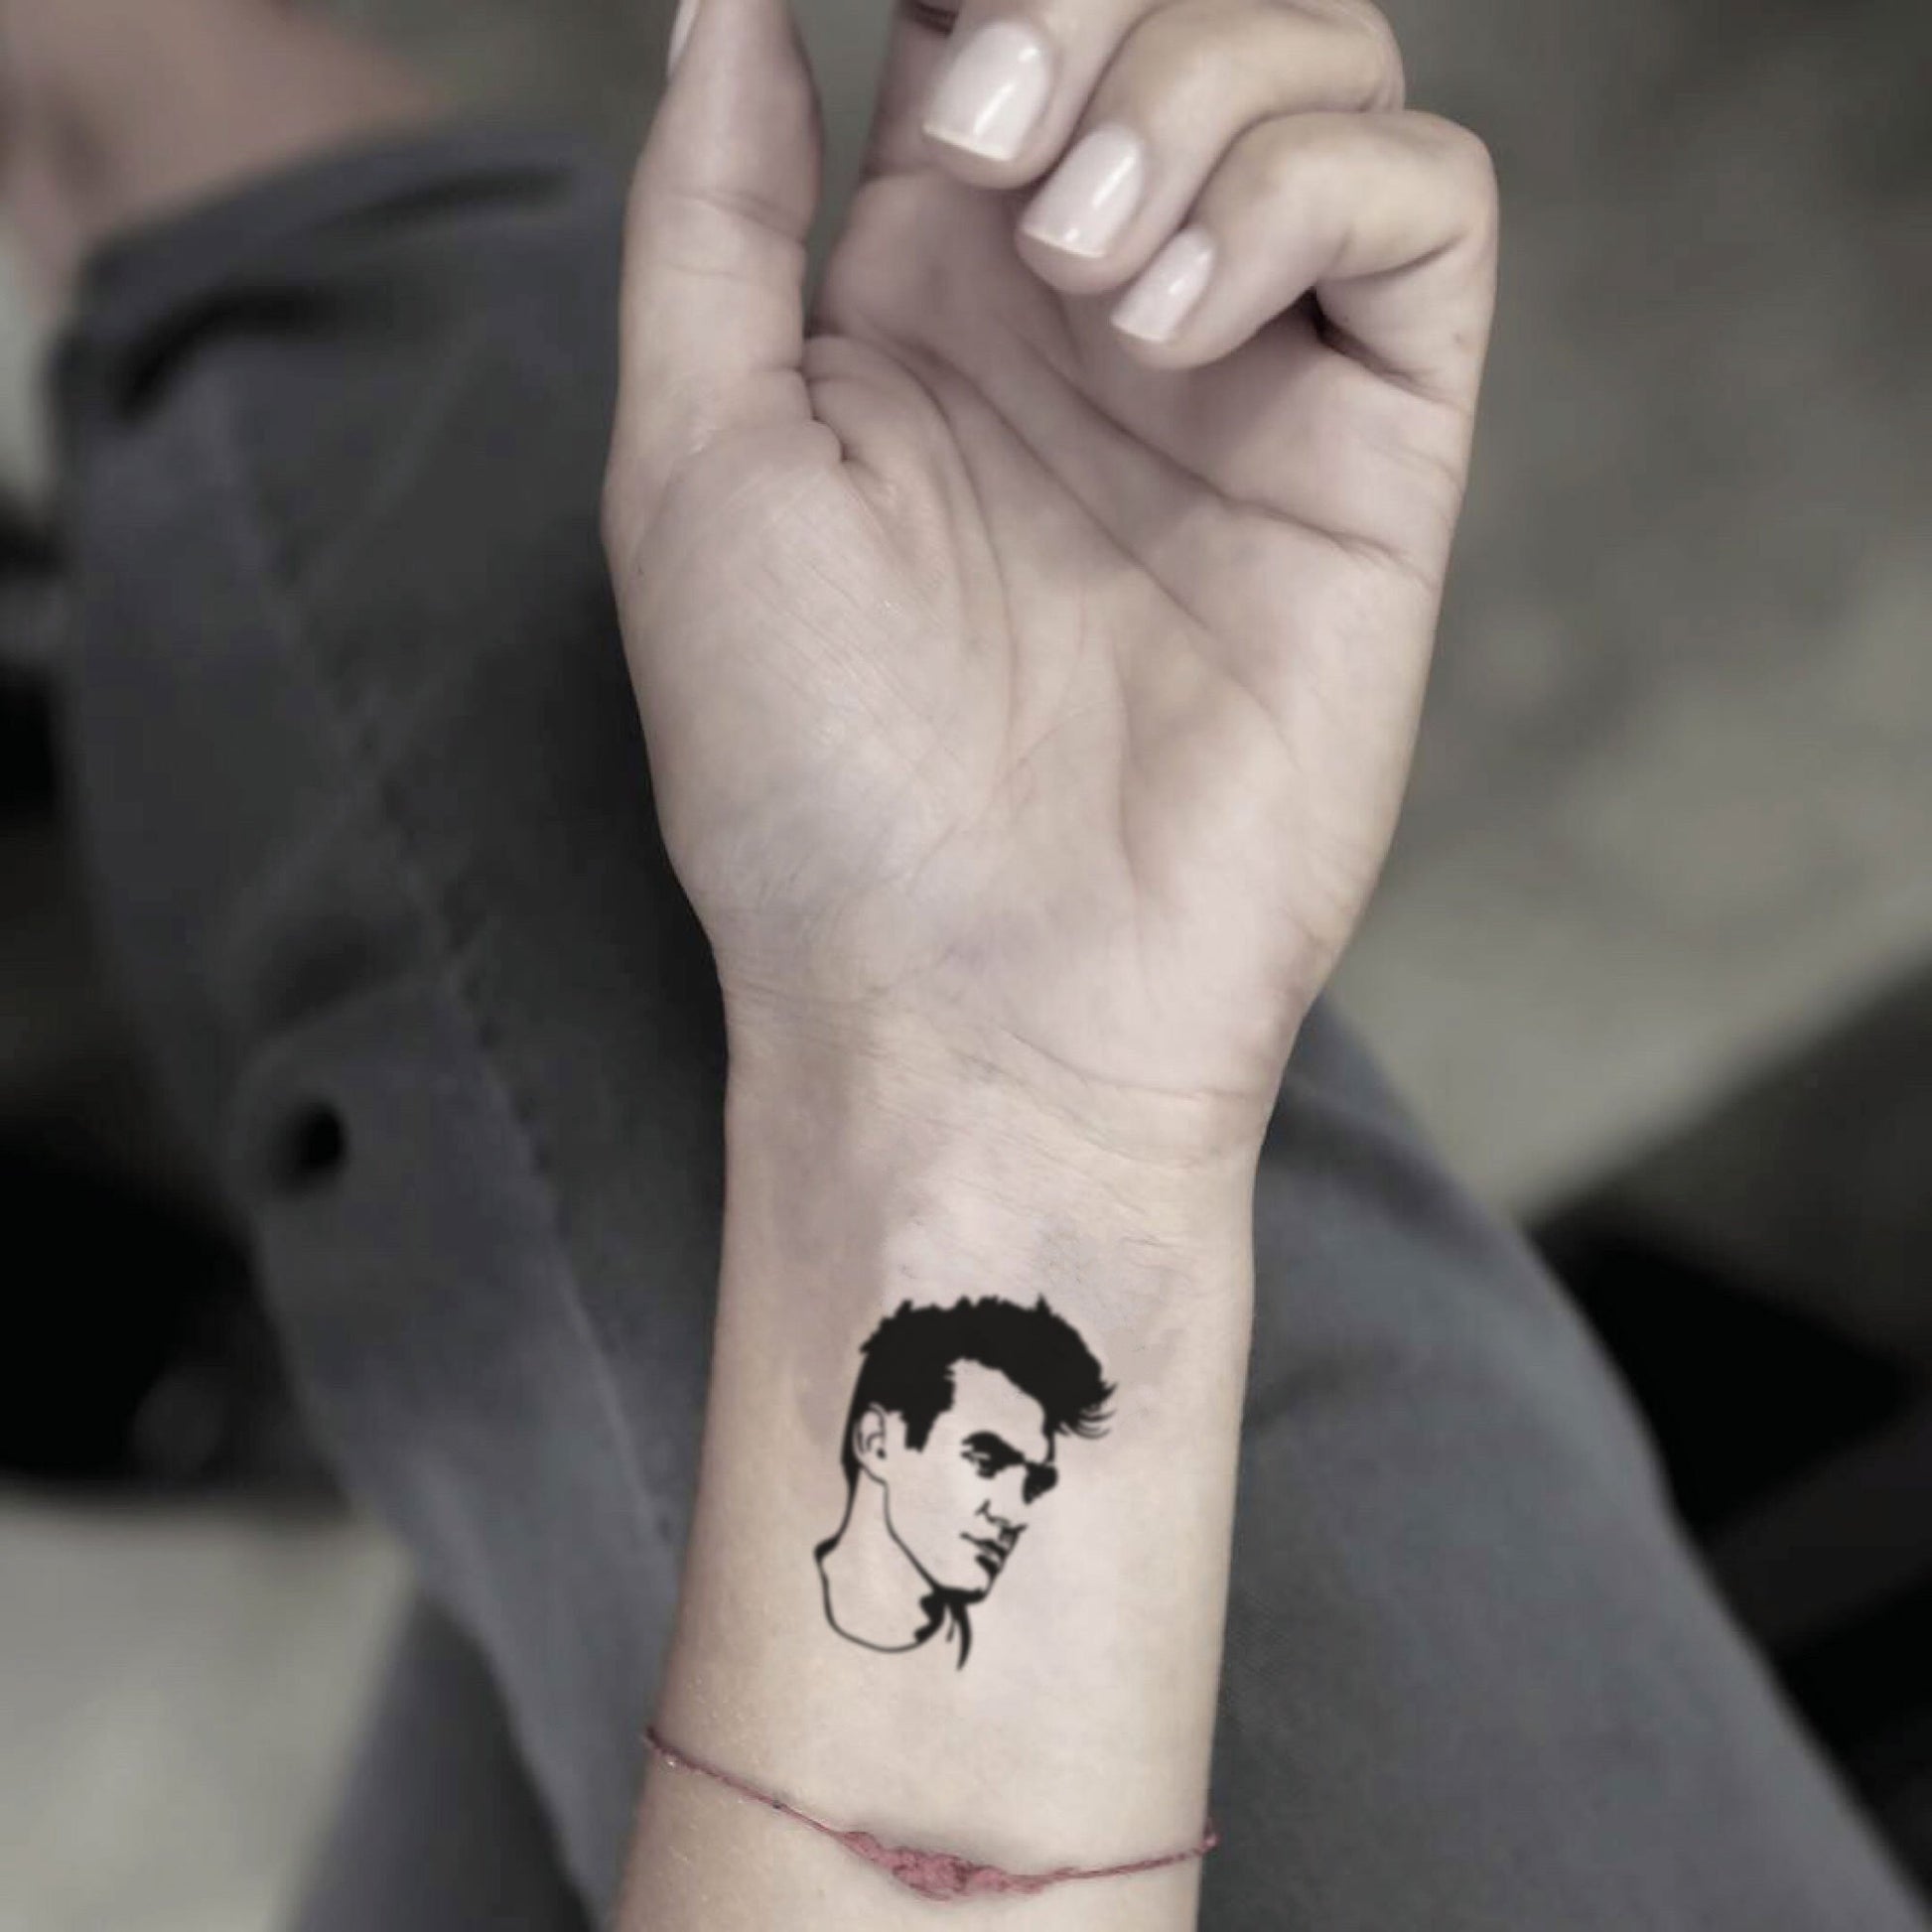 fake small morrissey outline portrait temporary tattoo sticker design idea on wrist